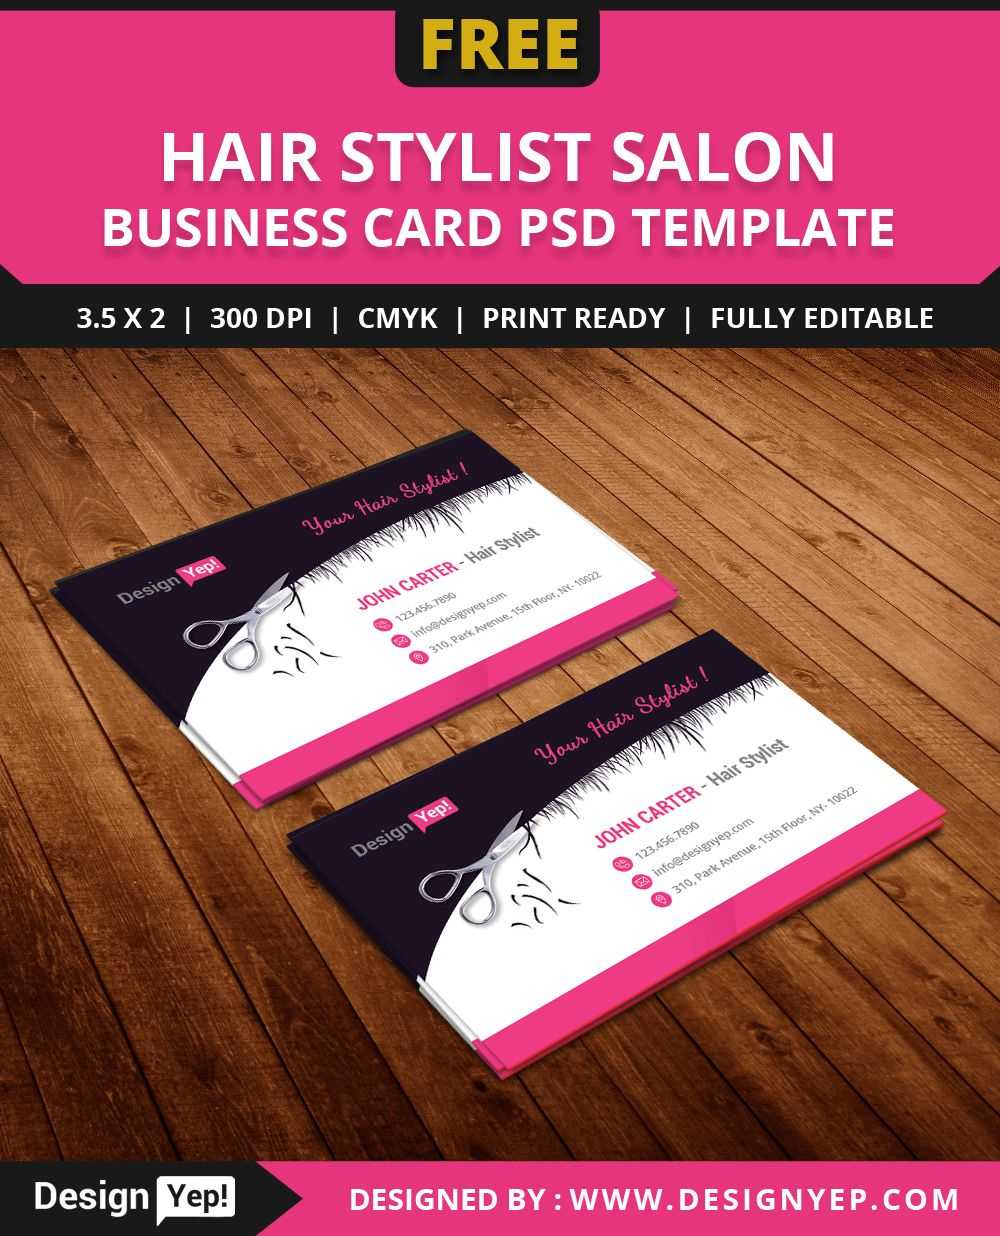 Free Hair Stylist Salon Business Card Template Psd | Free Throughout Hair Salon Business Card Template